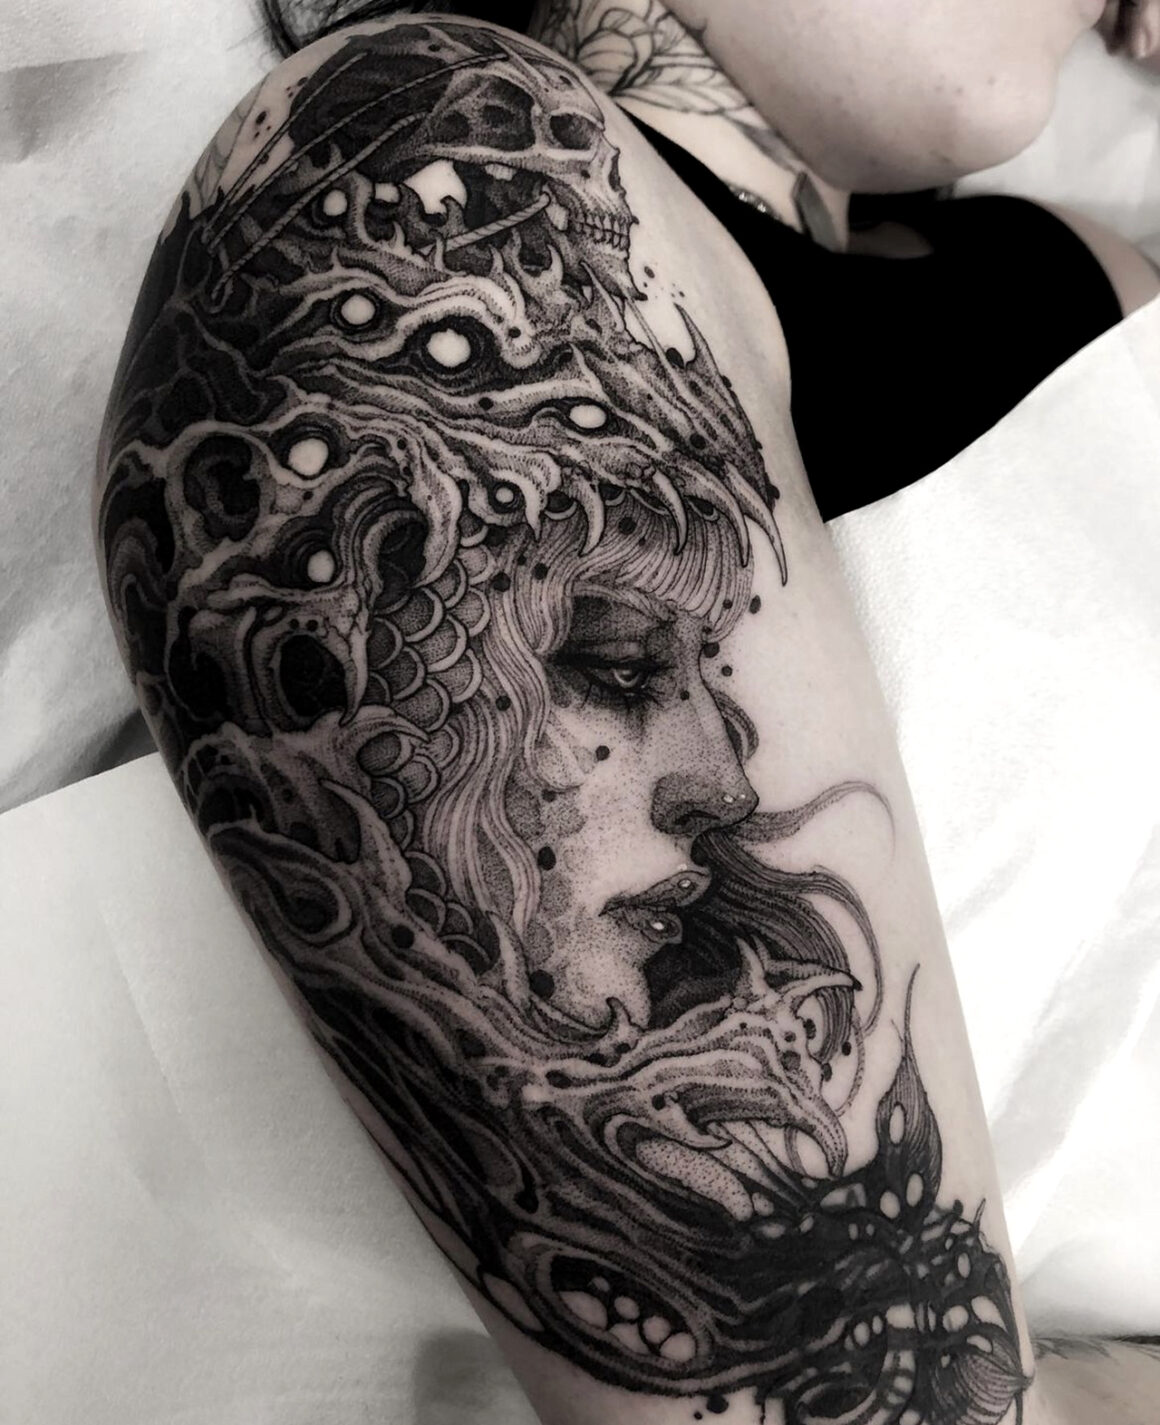 Share 94 about dark tattoo designs latest  indaotaonec